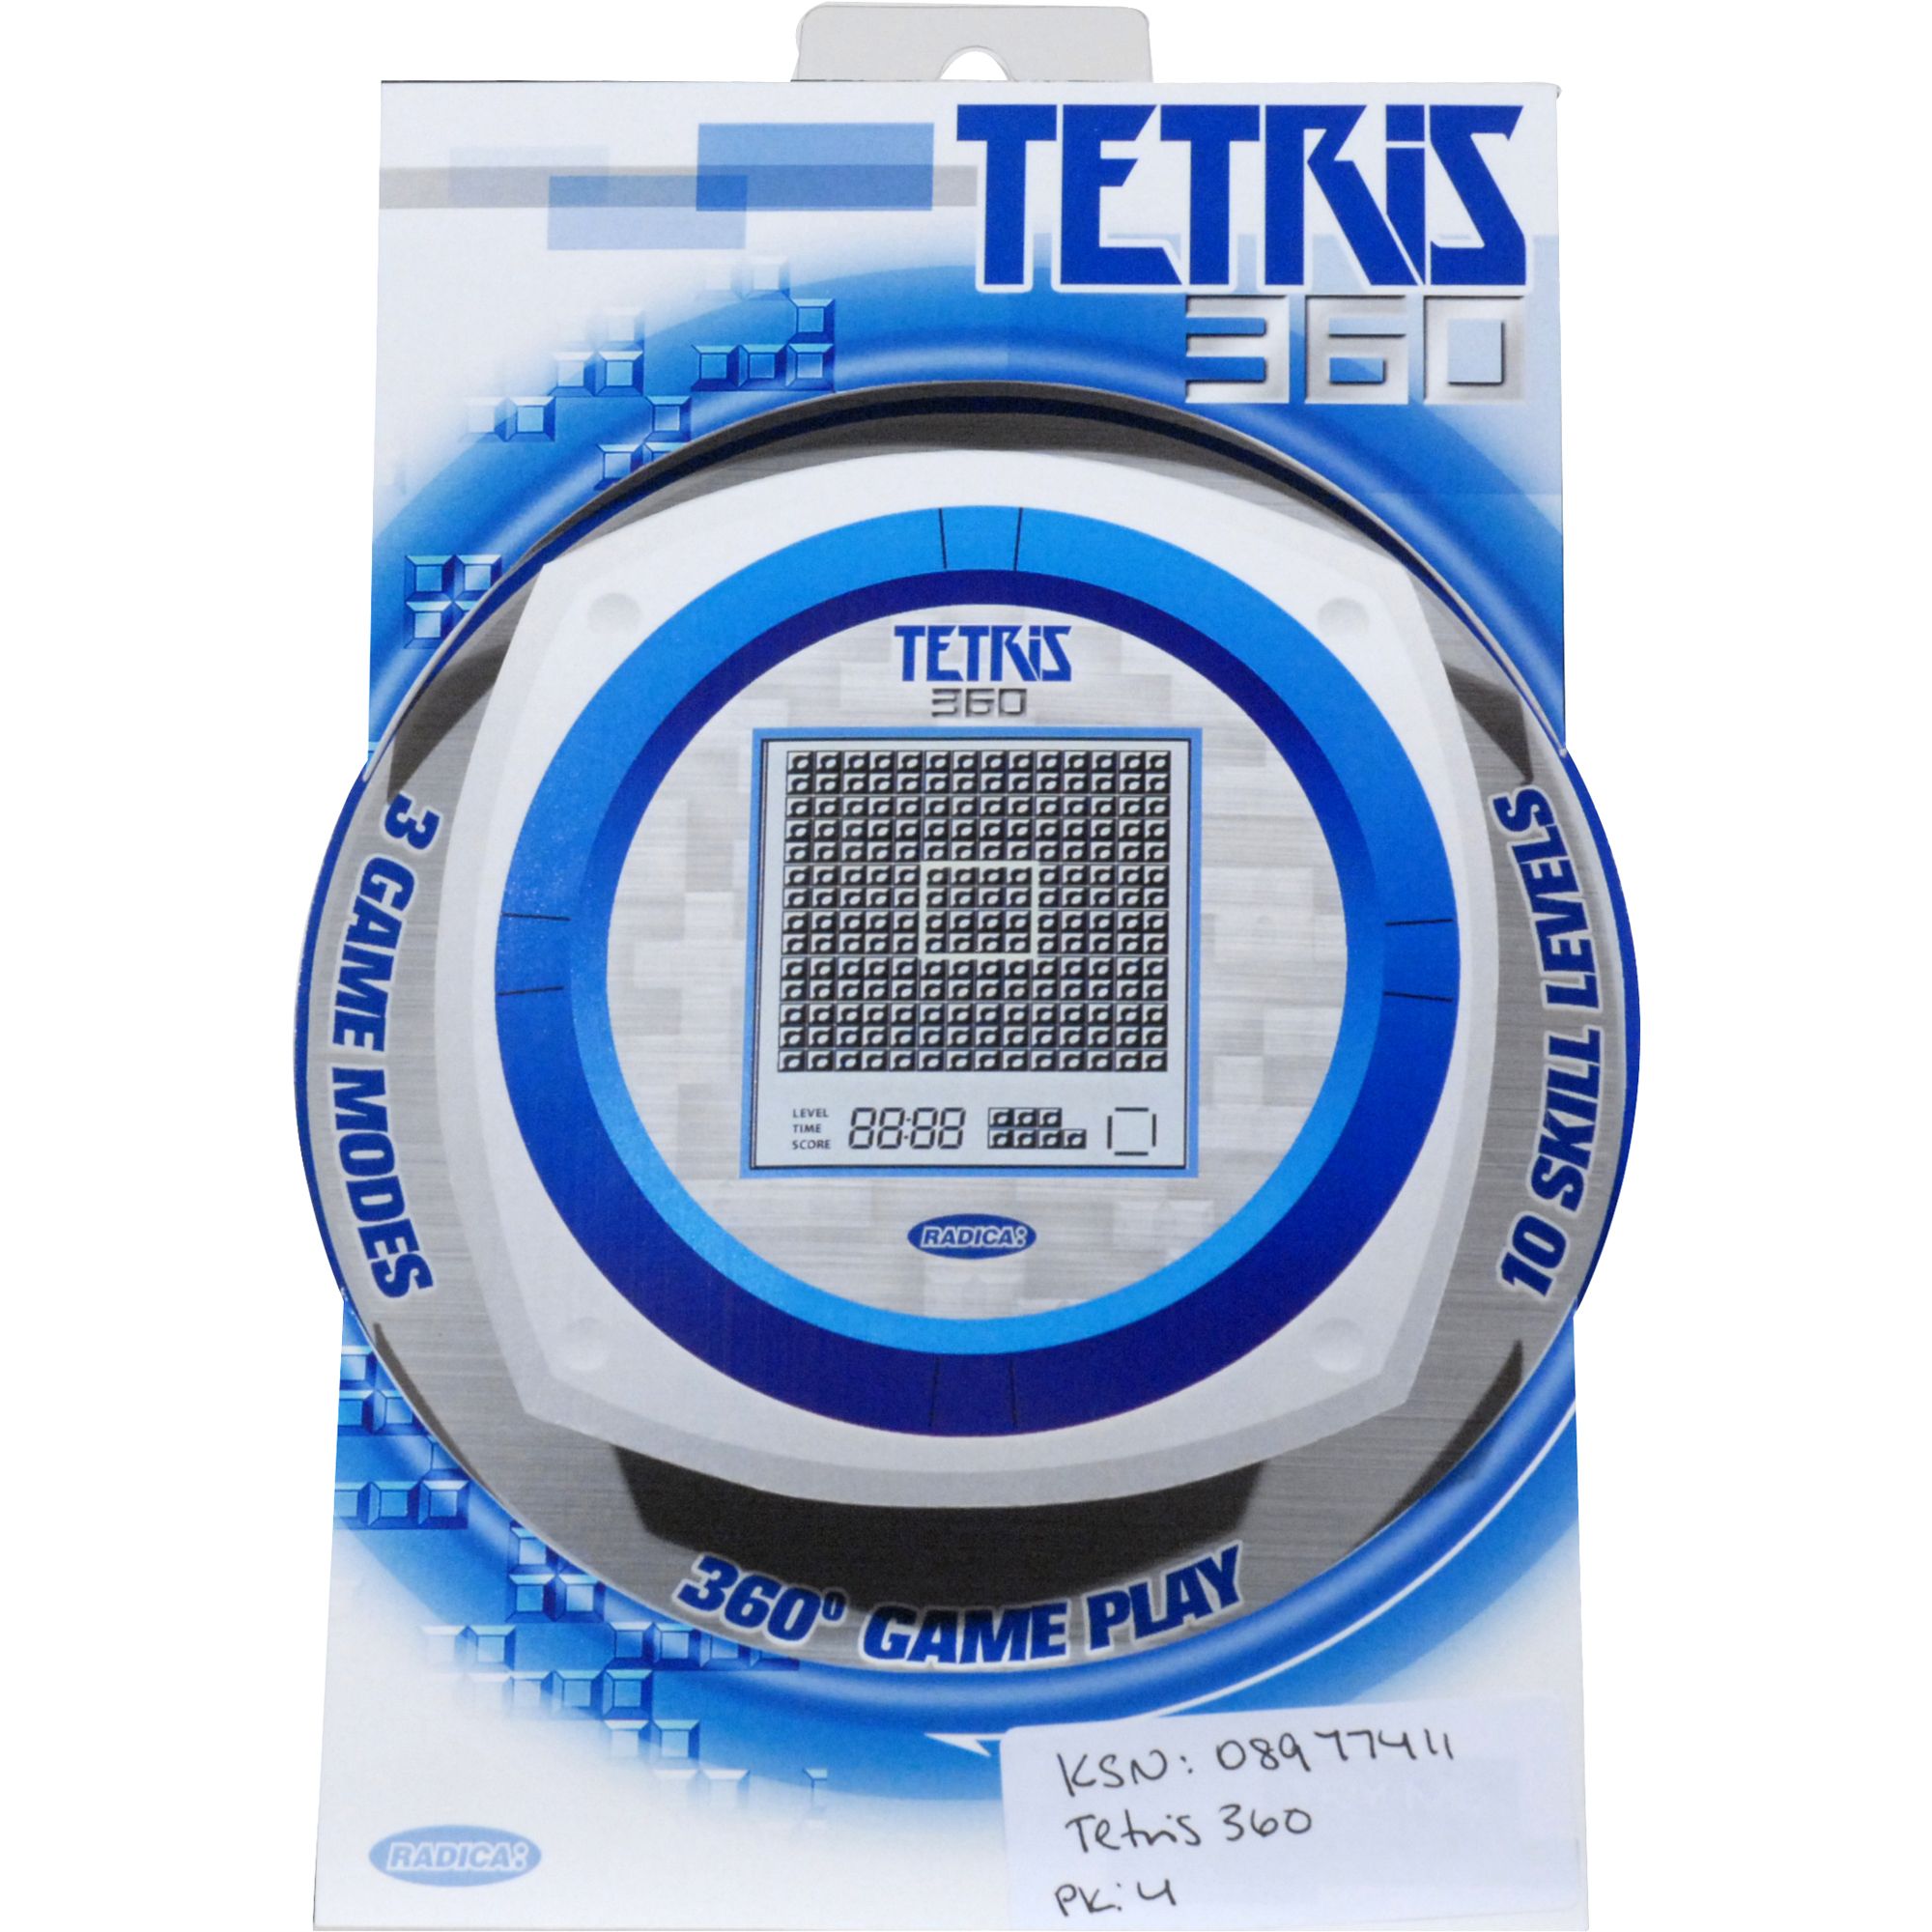 Radica USA Ltd. Tetris 360